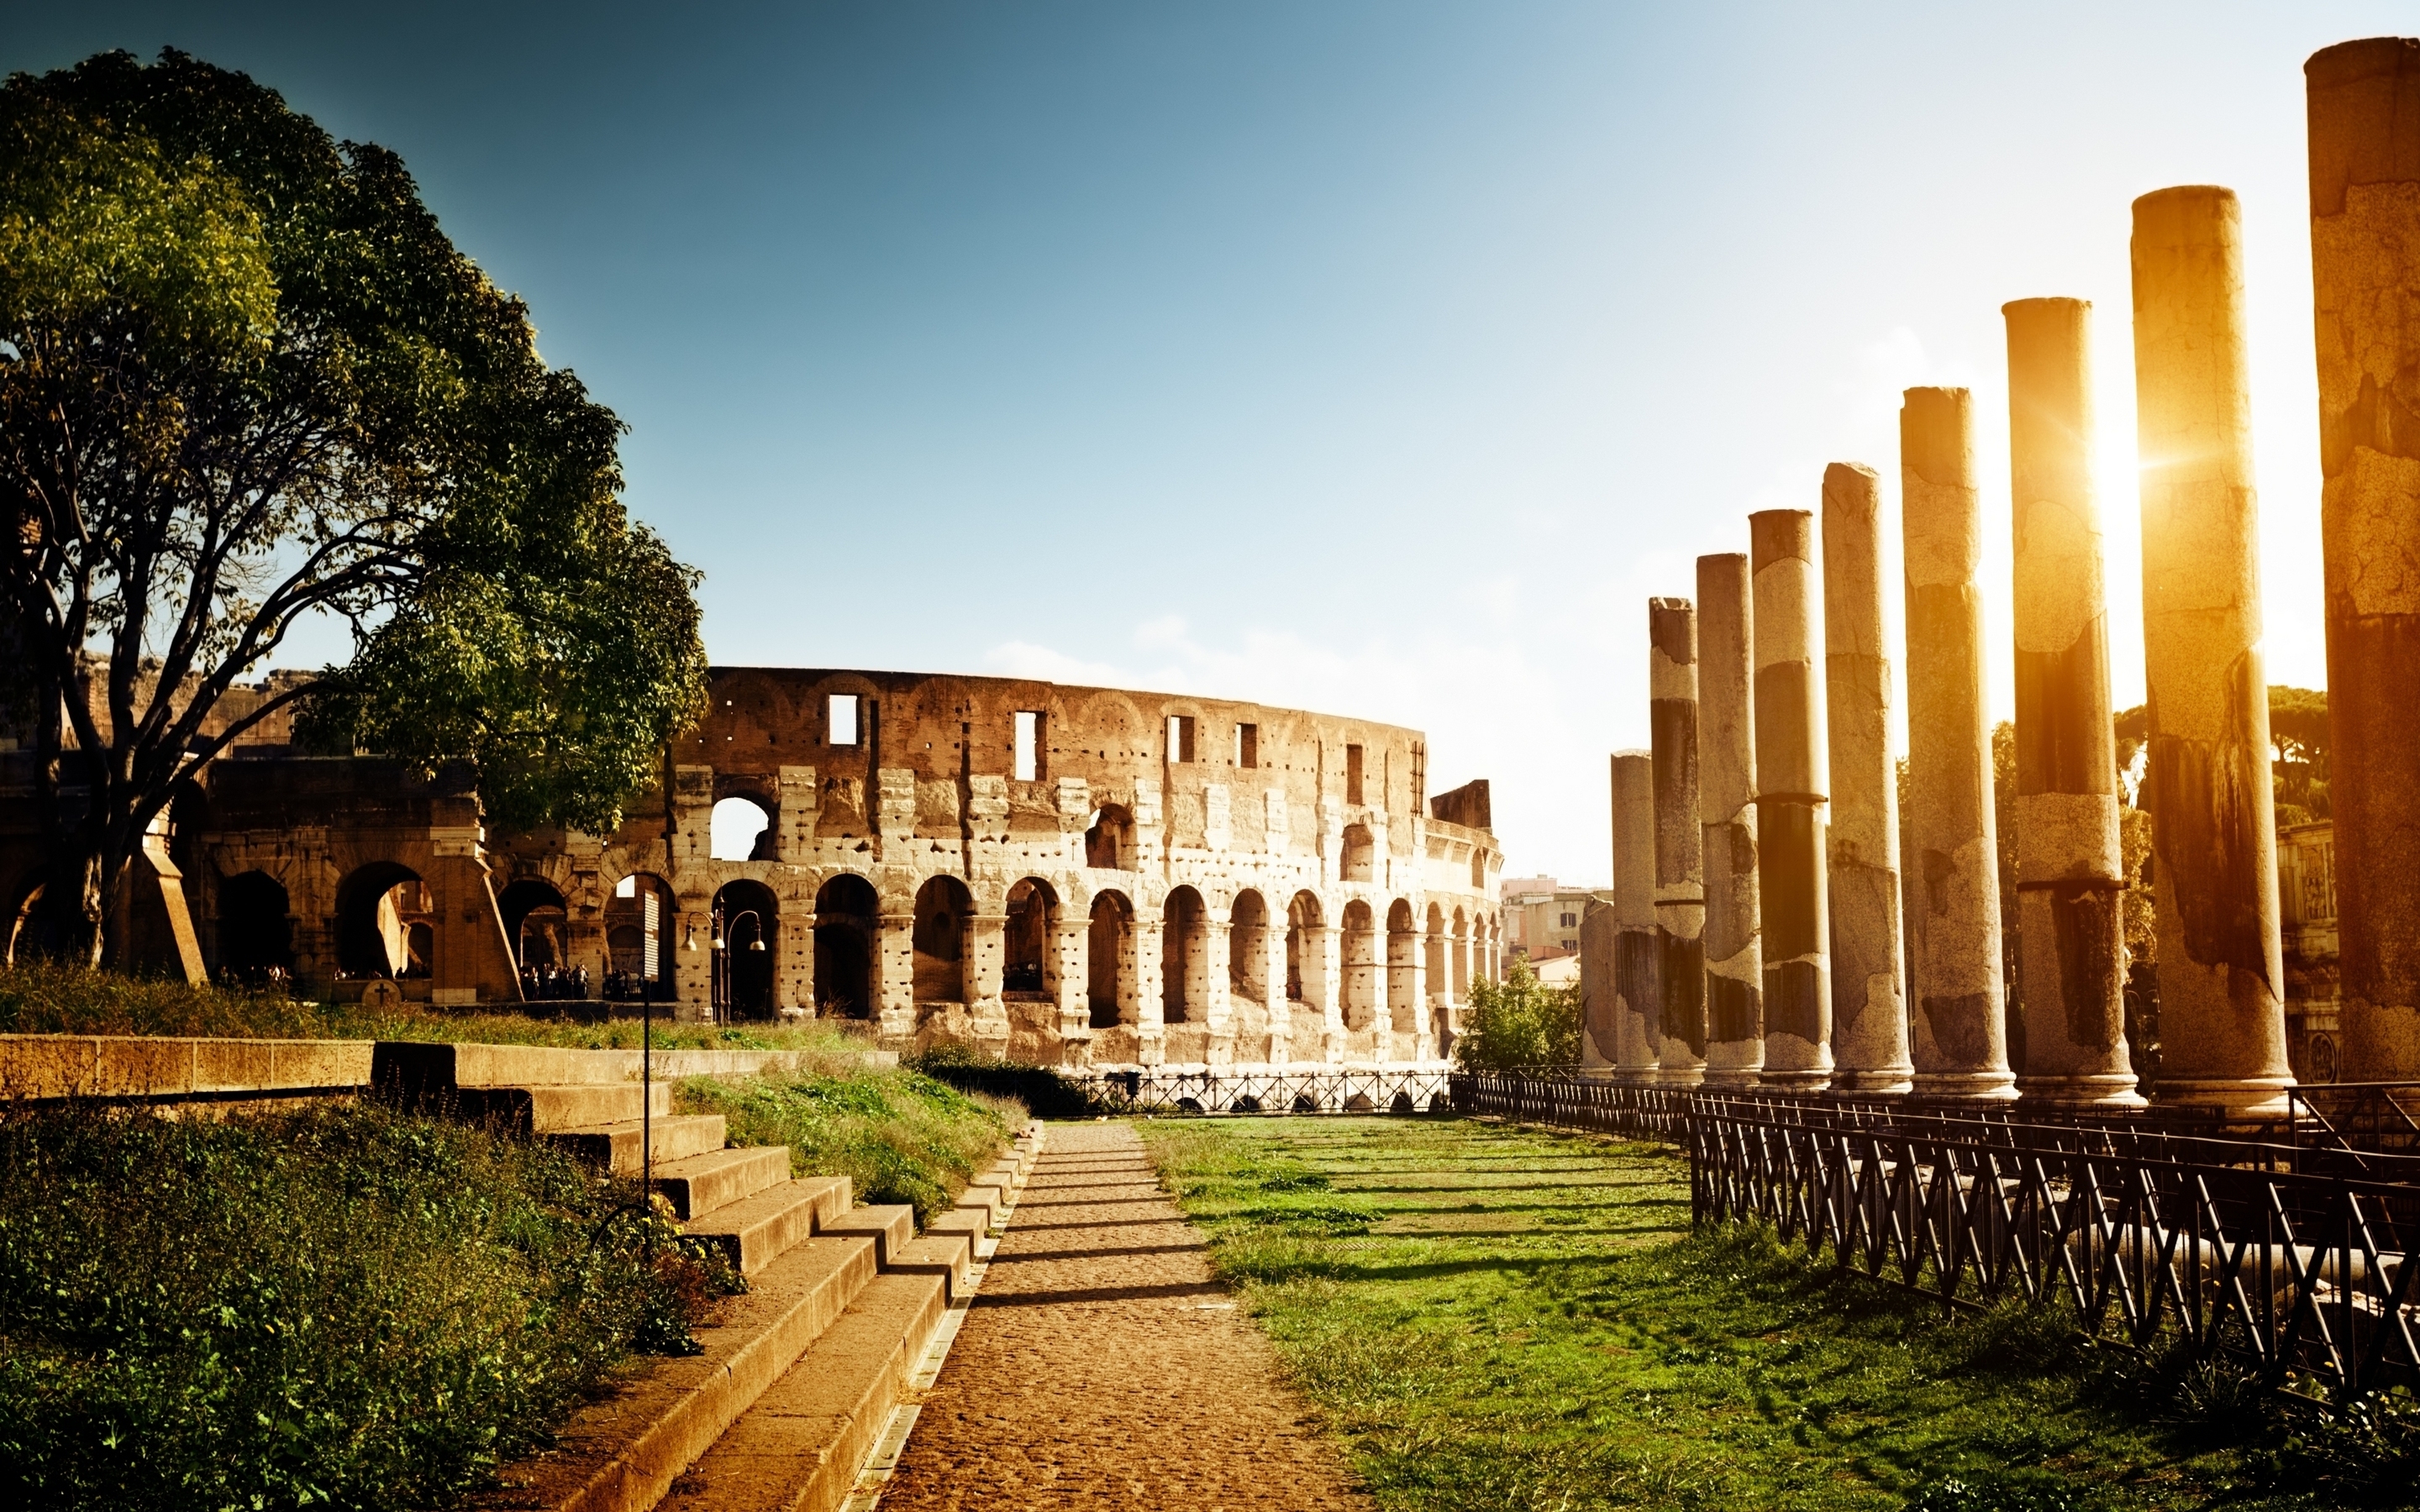 Superb View of Colosseum for 2880 x 1800 Retina Display resolution